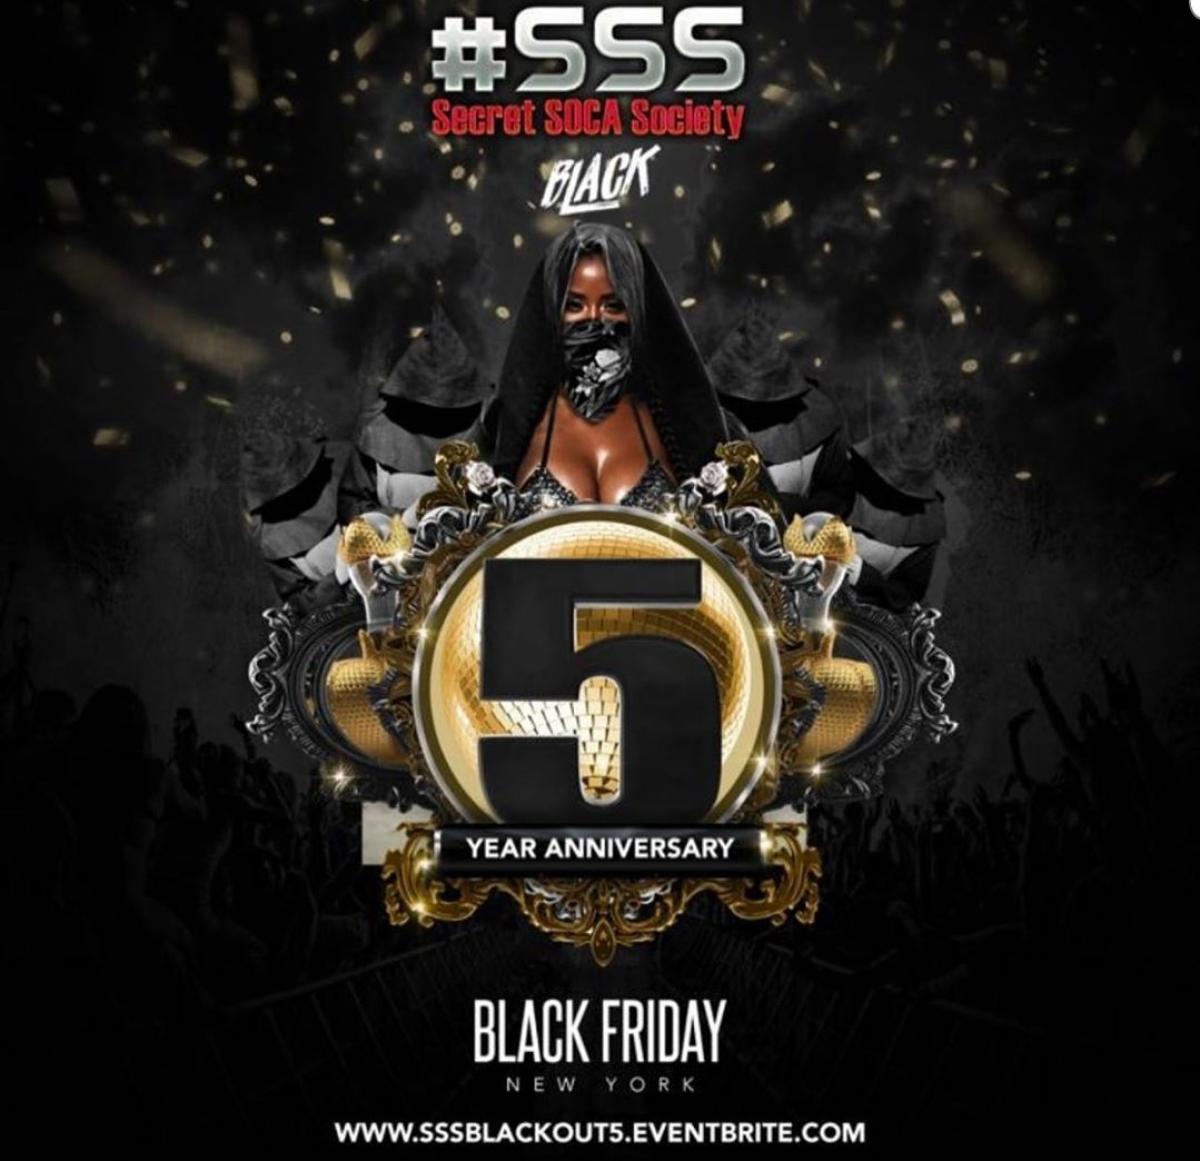 #SSS Black flyer or graphic.